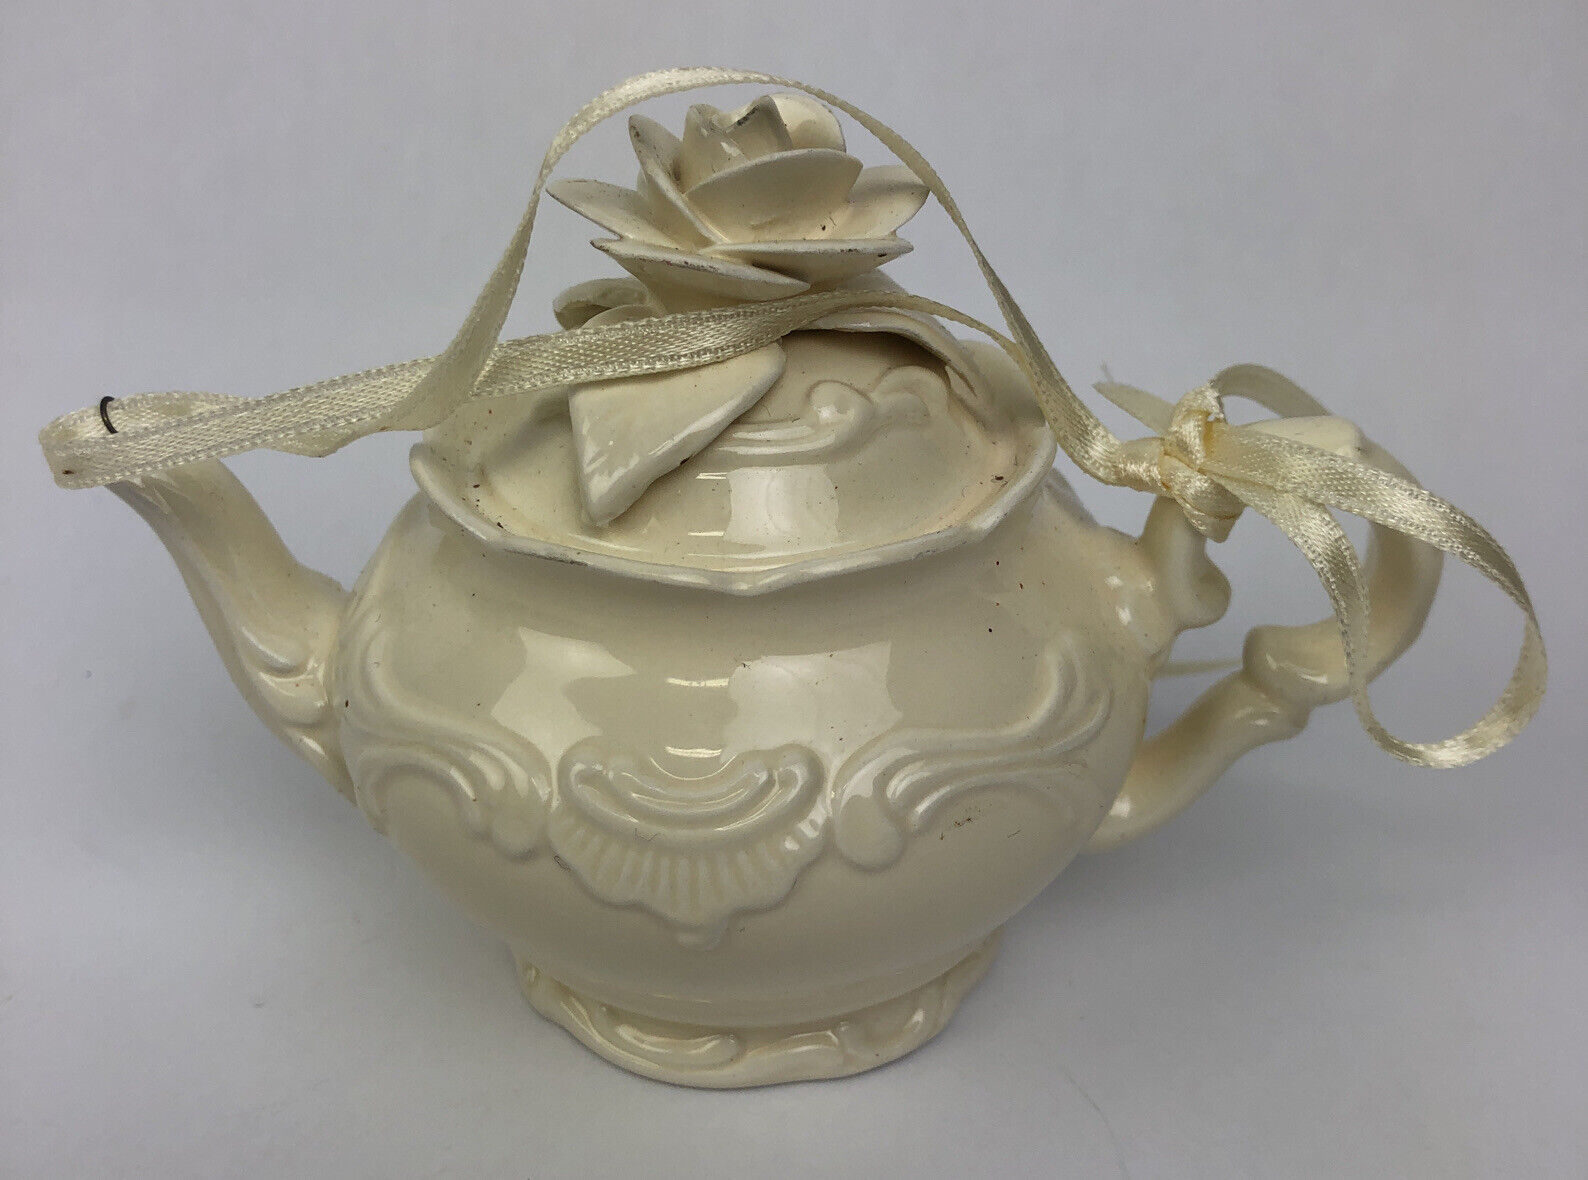 Primary image for VINTAGE 1998 Mud Pie Victorian Rose Ivory Porcelain Teapot Ornament - Rare Find